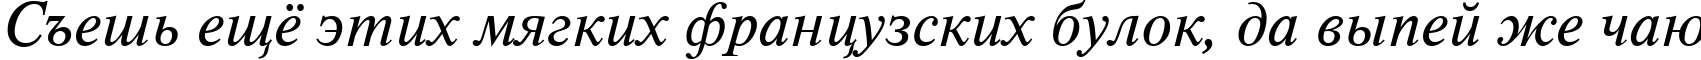 Пример написания шрифтом TimelessTCYLig Italic текста на русском